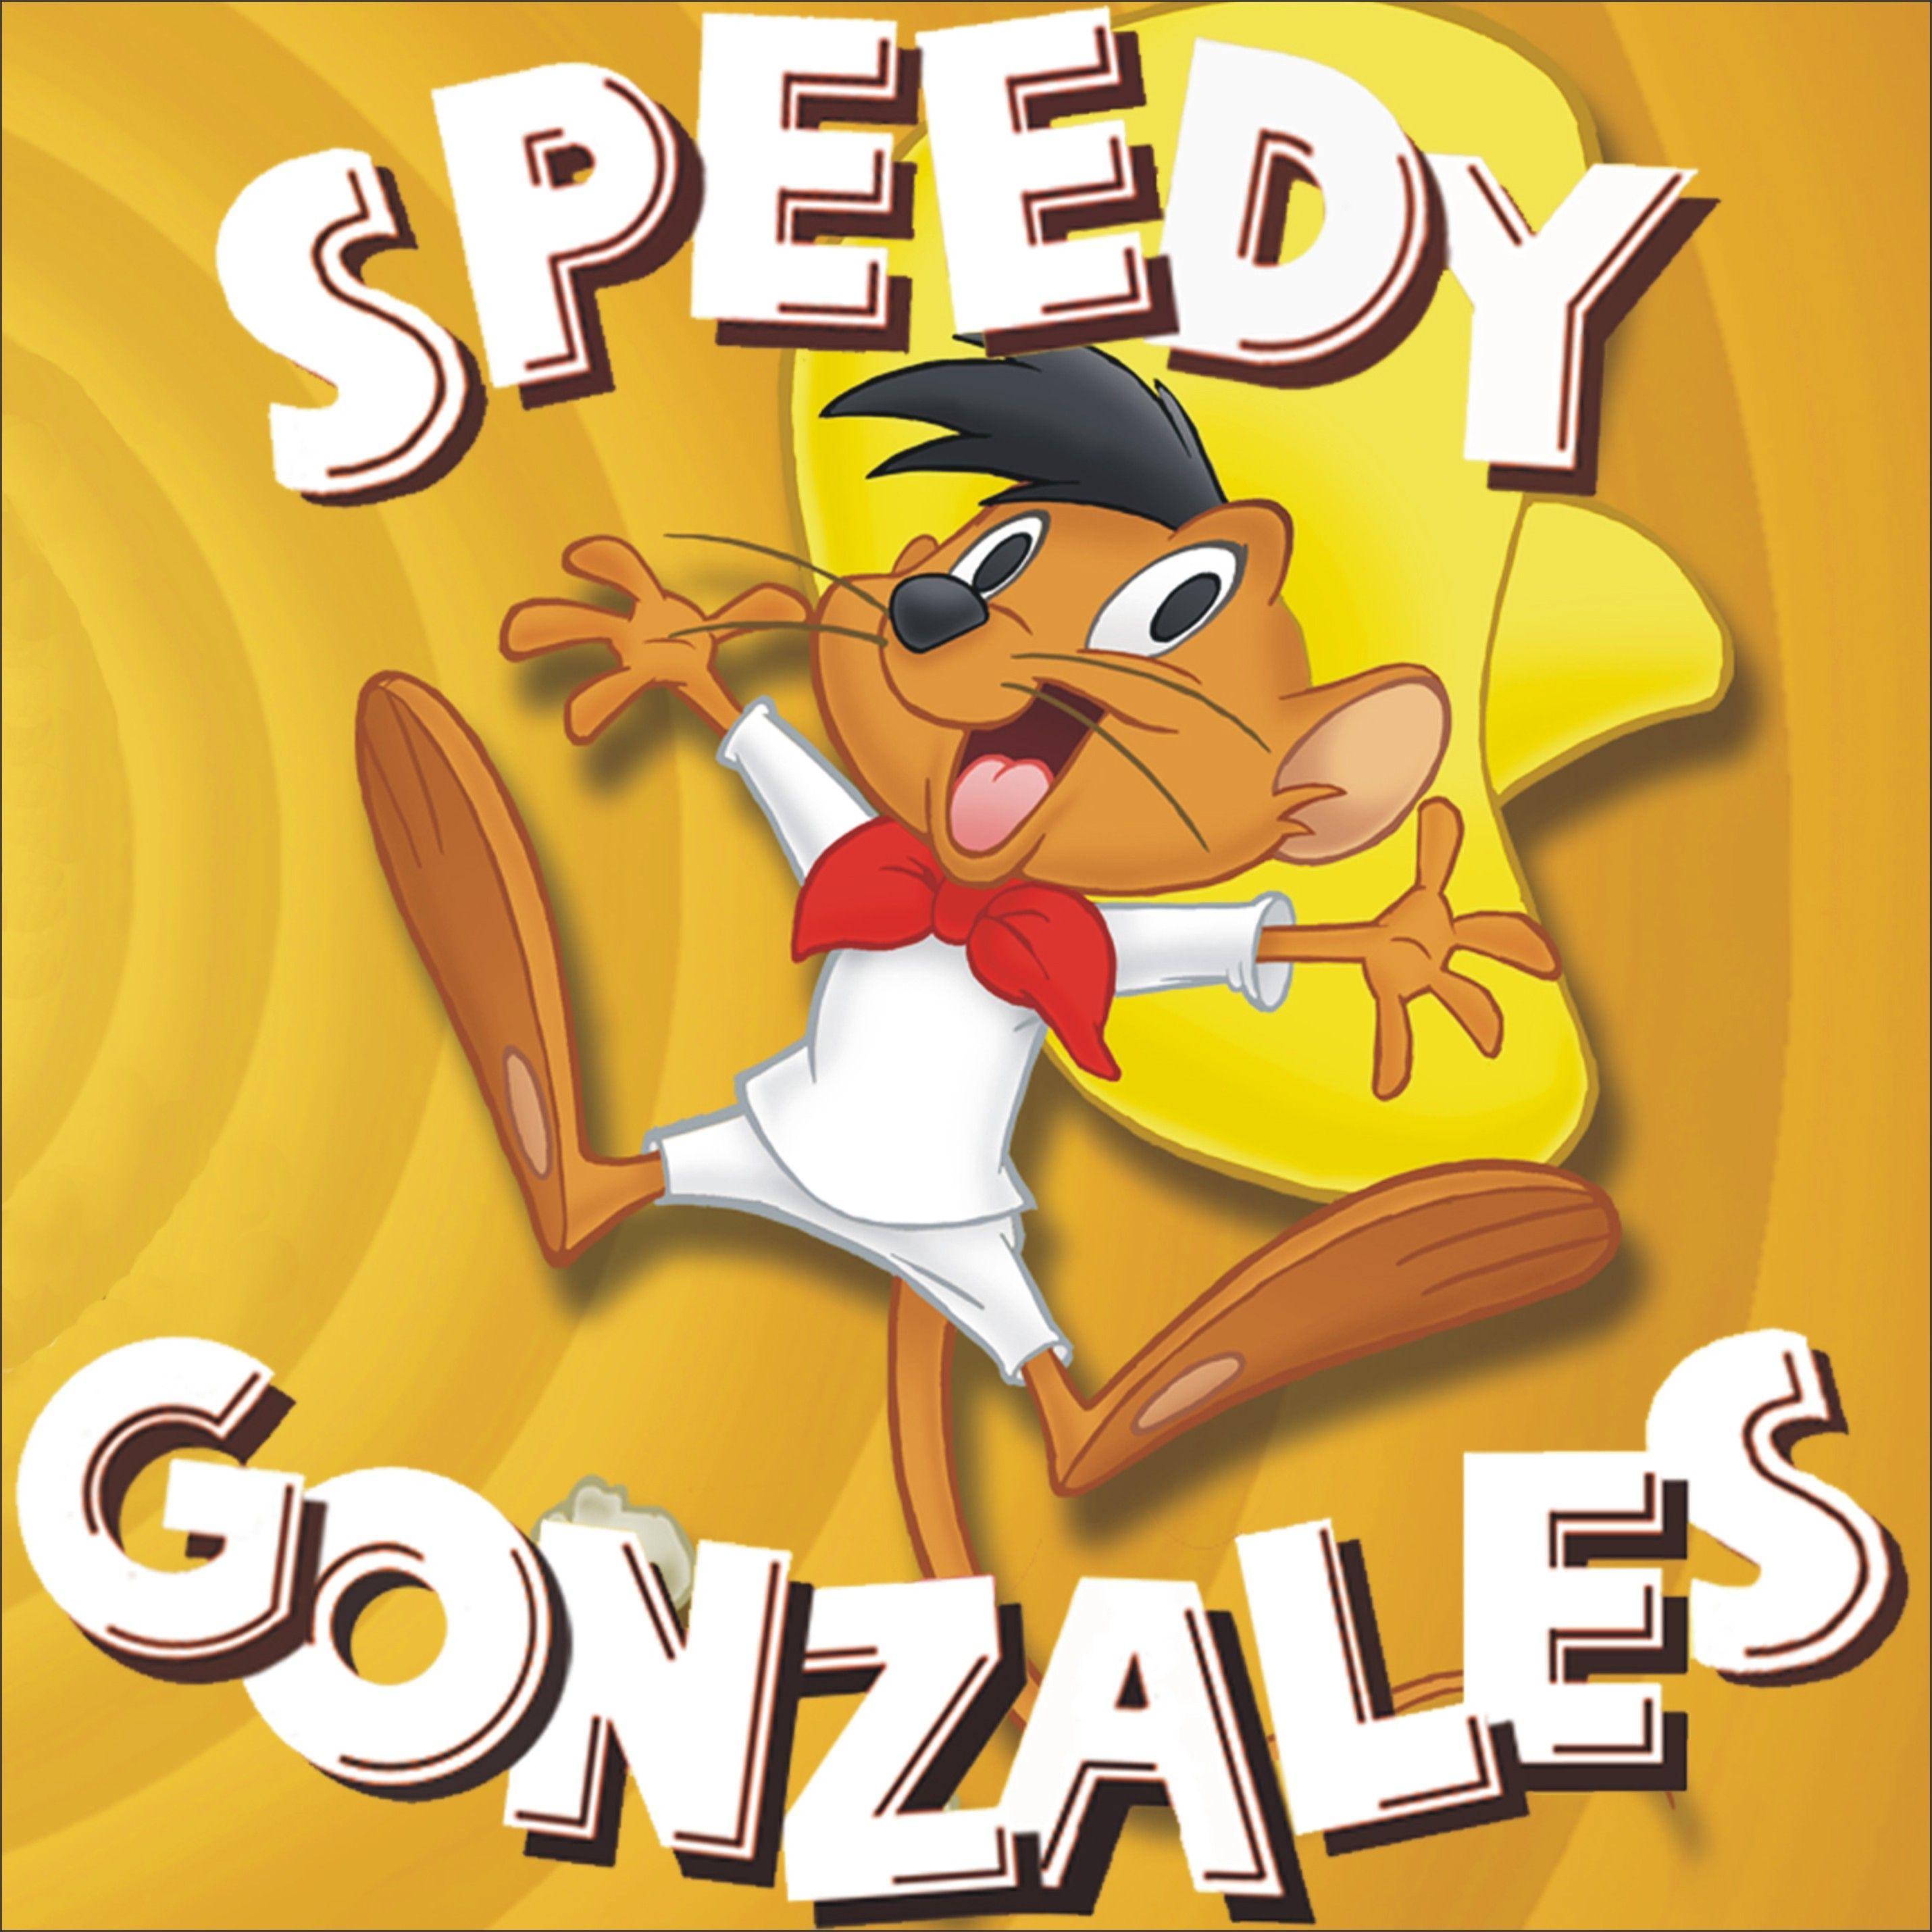 Download Speedy Gonzales Sketch Art Wallpaper